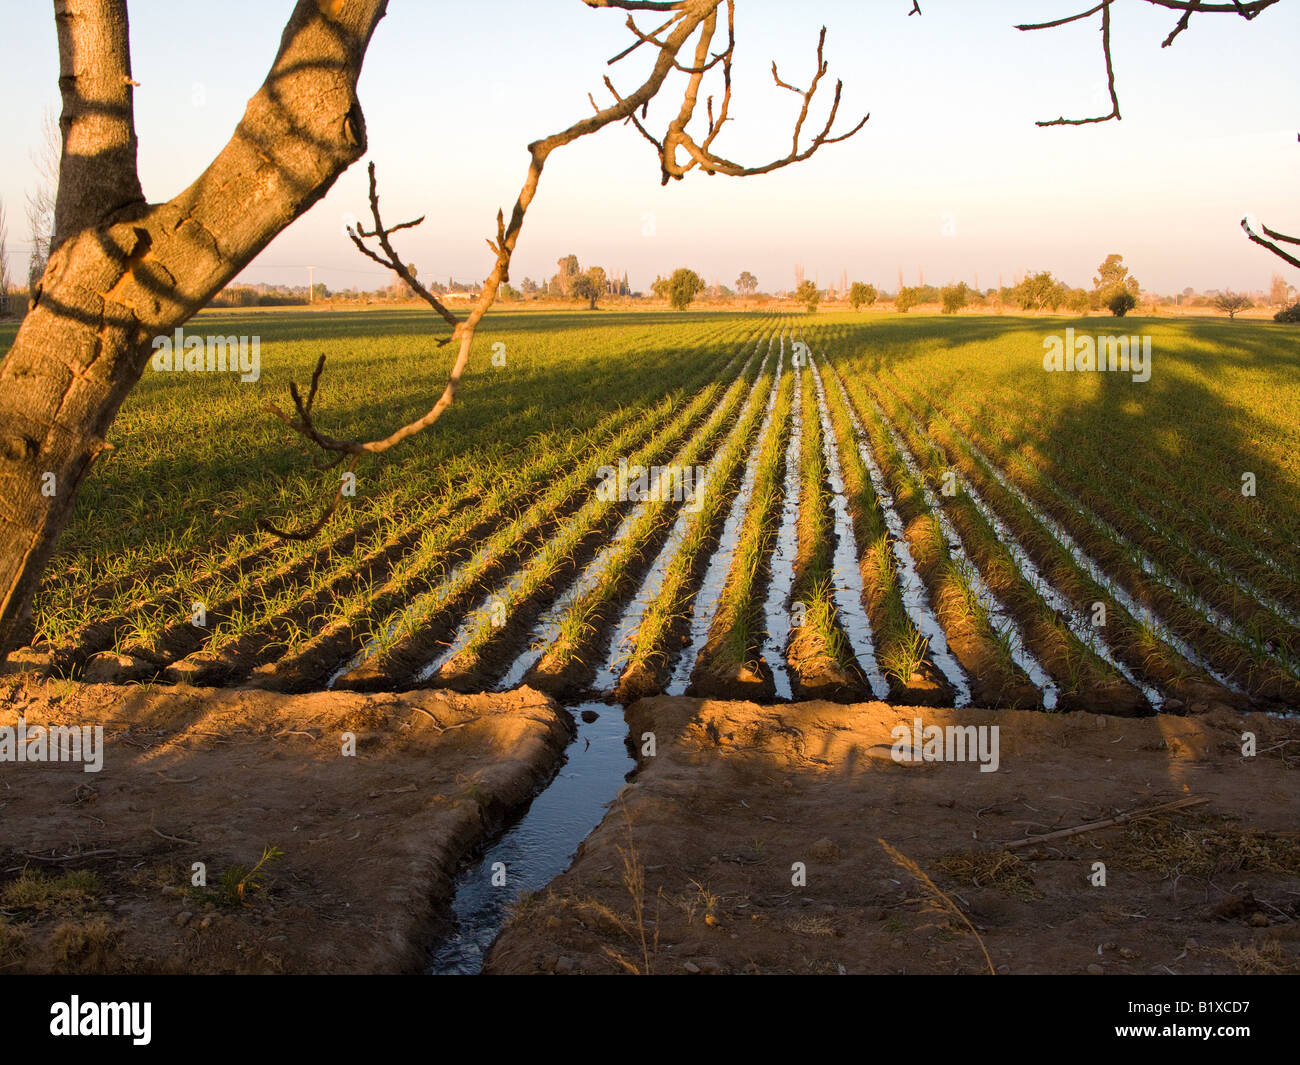 Irrigation in winter croplands in San Juan, Argentina Stock Photo